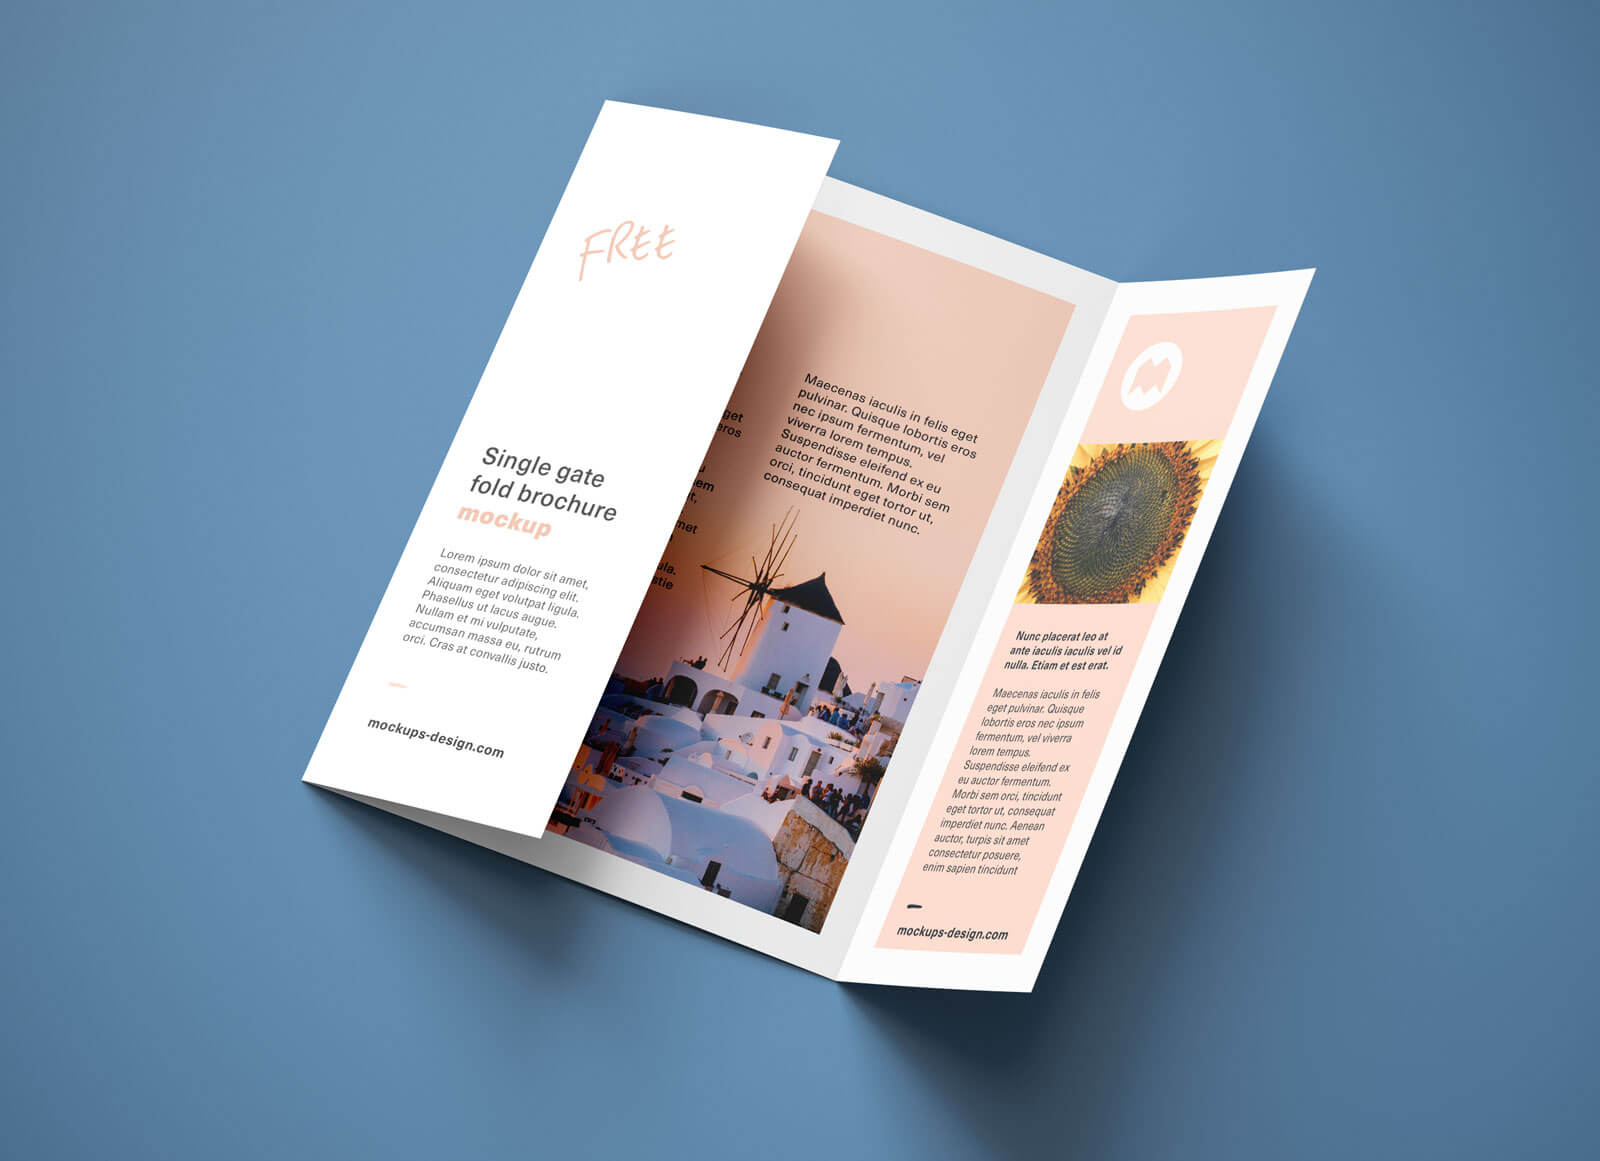 Free A4 Single Gate Fold Brochure Mockup Psd Set – Good Mockups Within Single Page Brochure Templates Psd